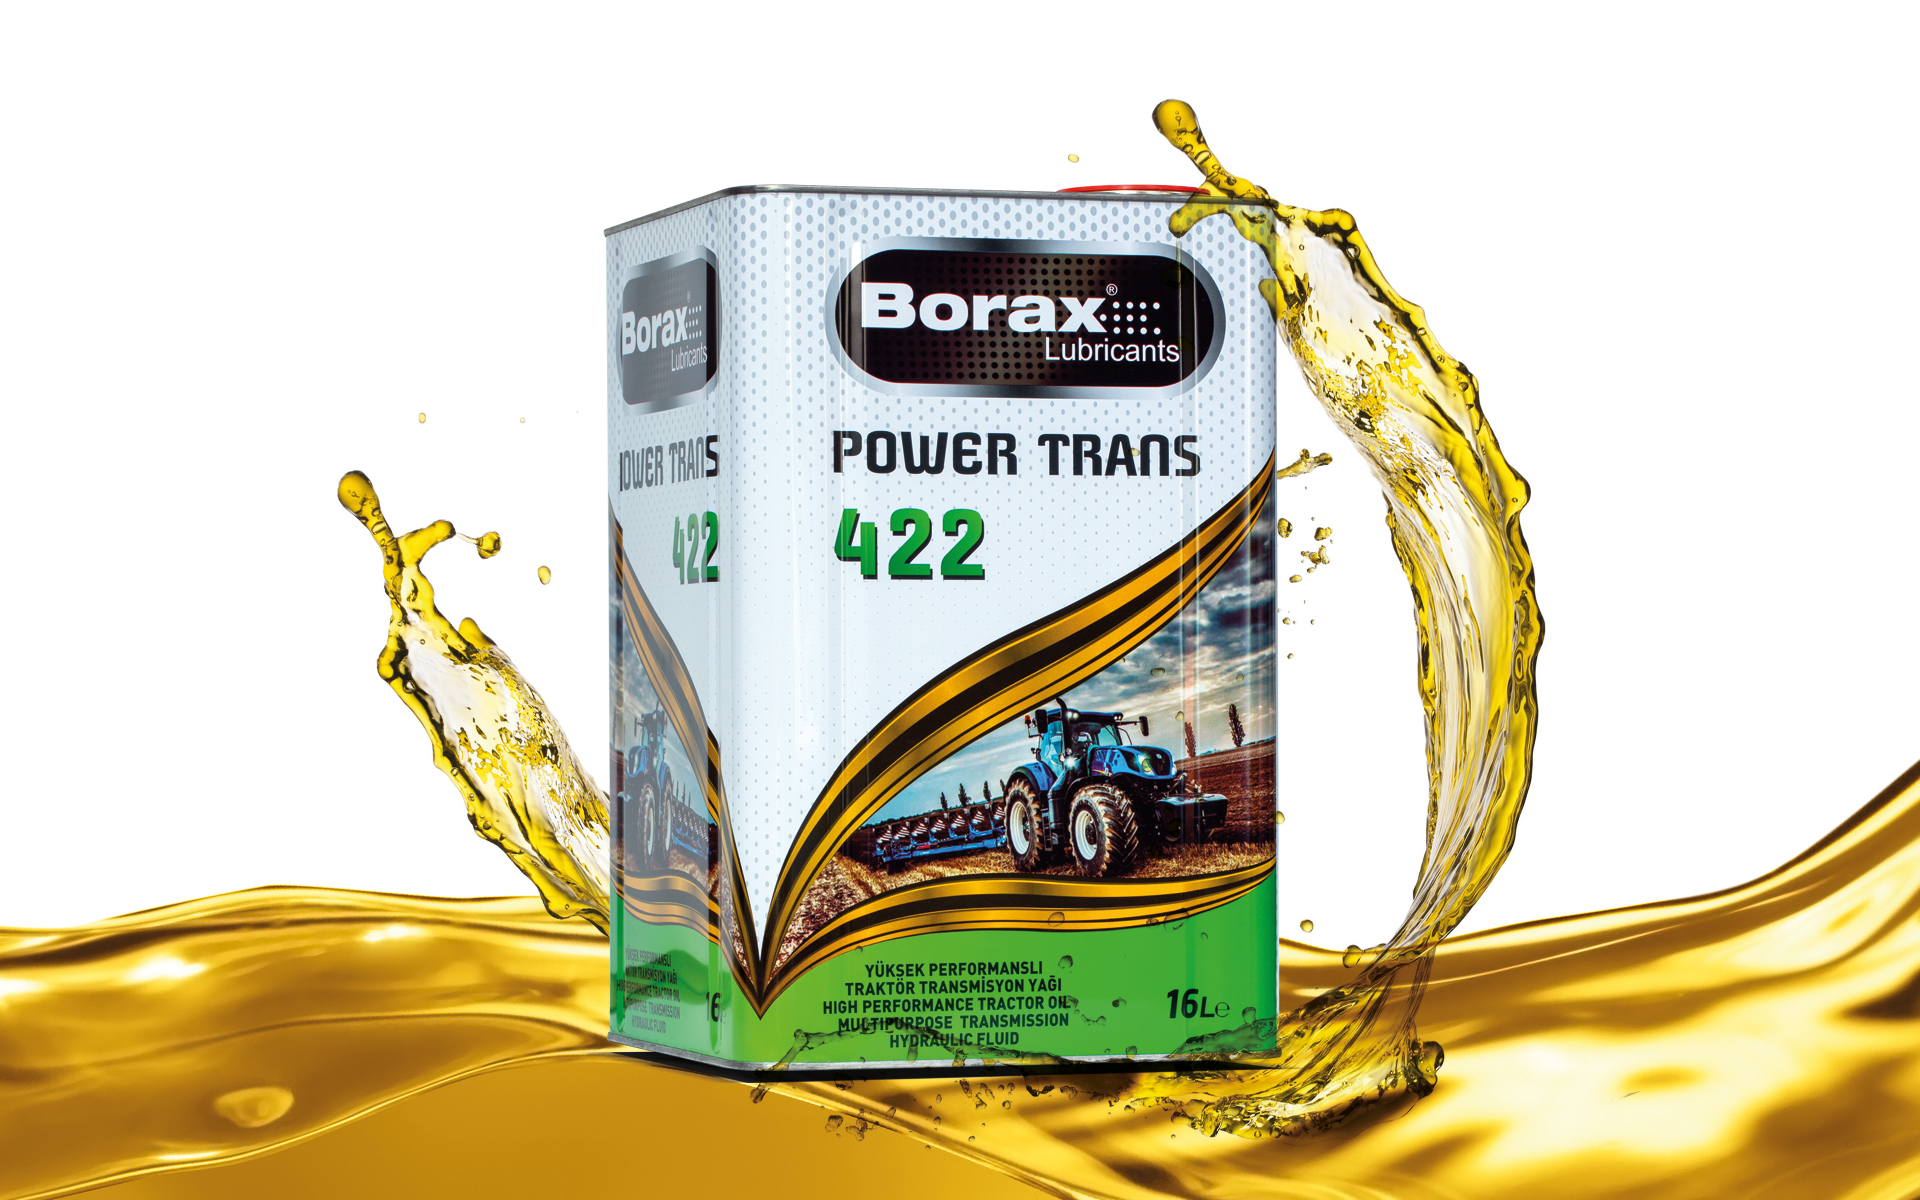 BORAX POWER TRANS 422